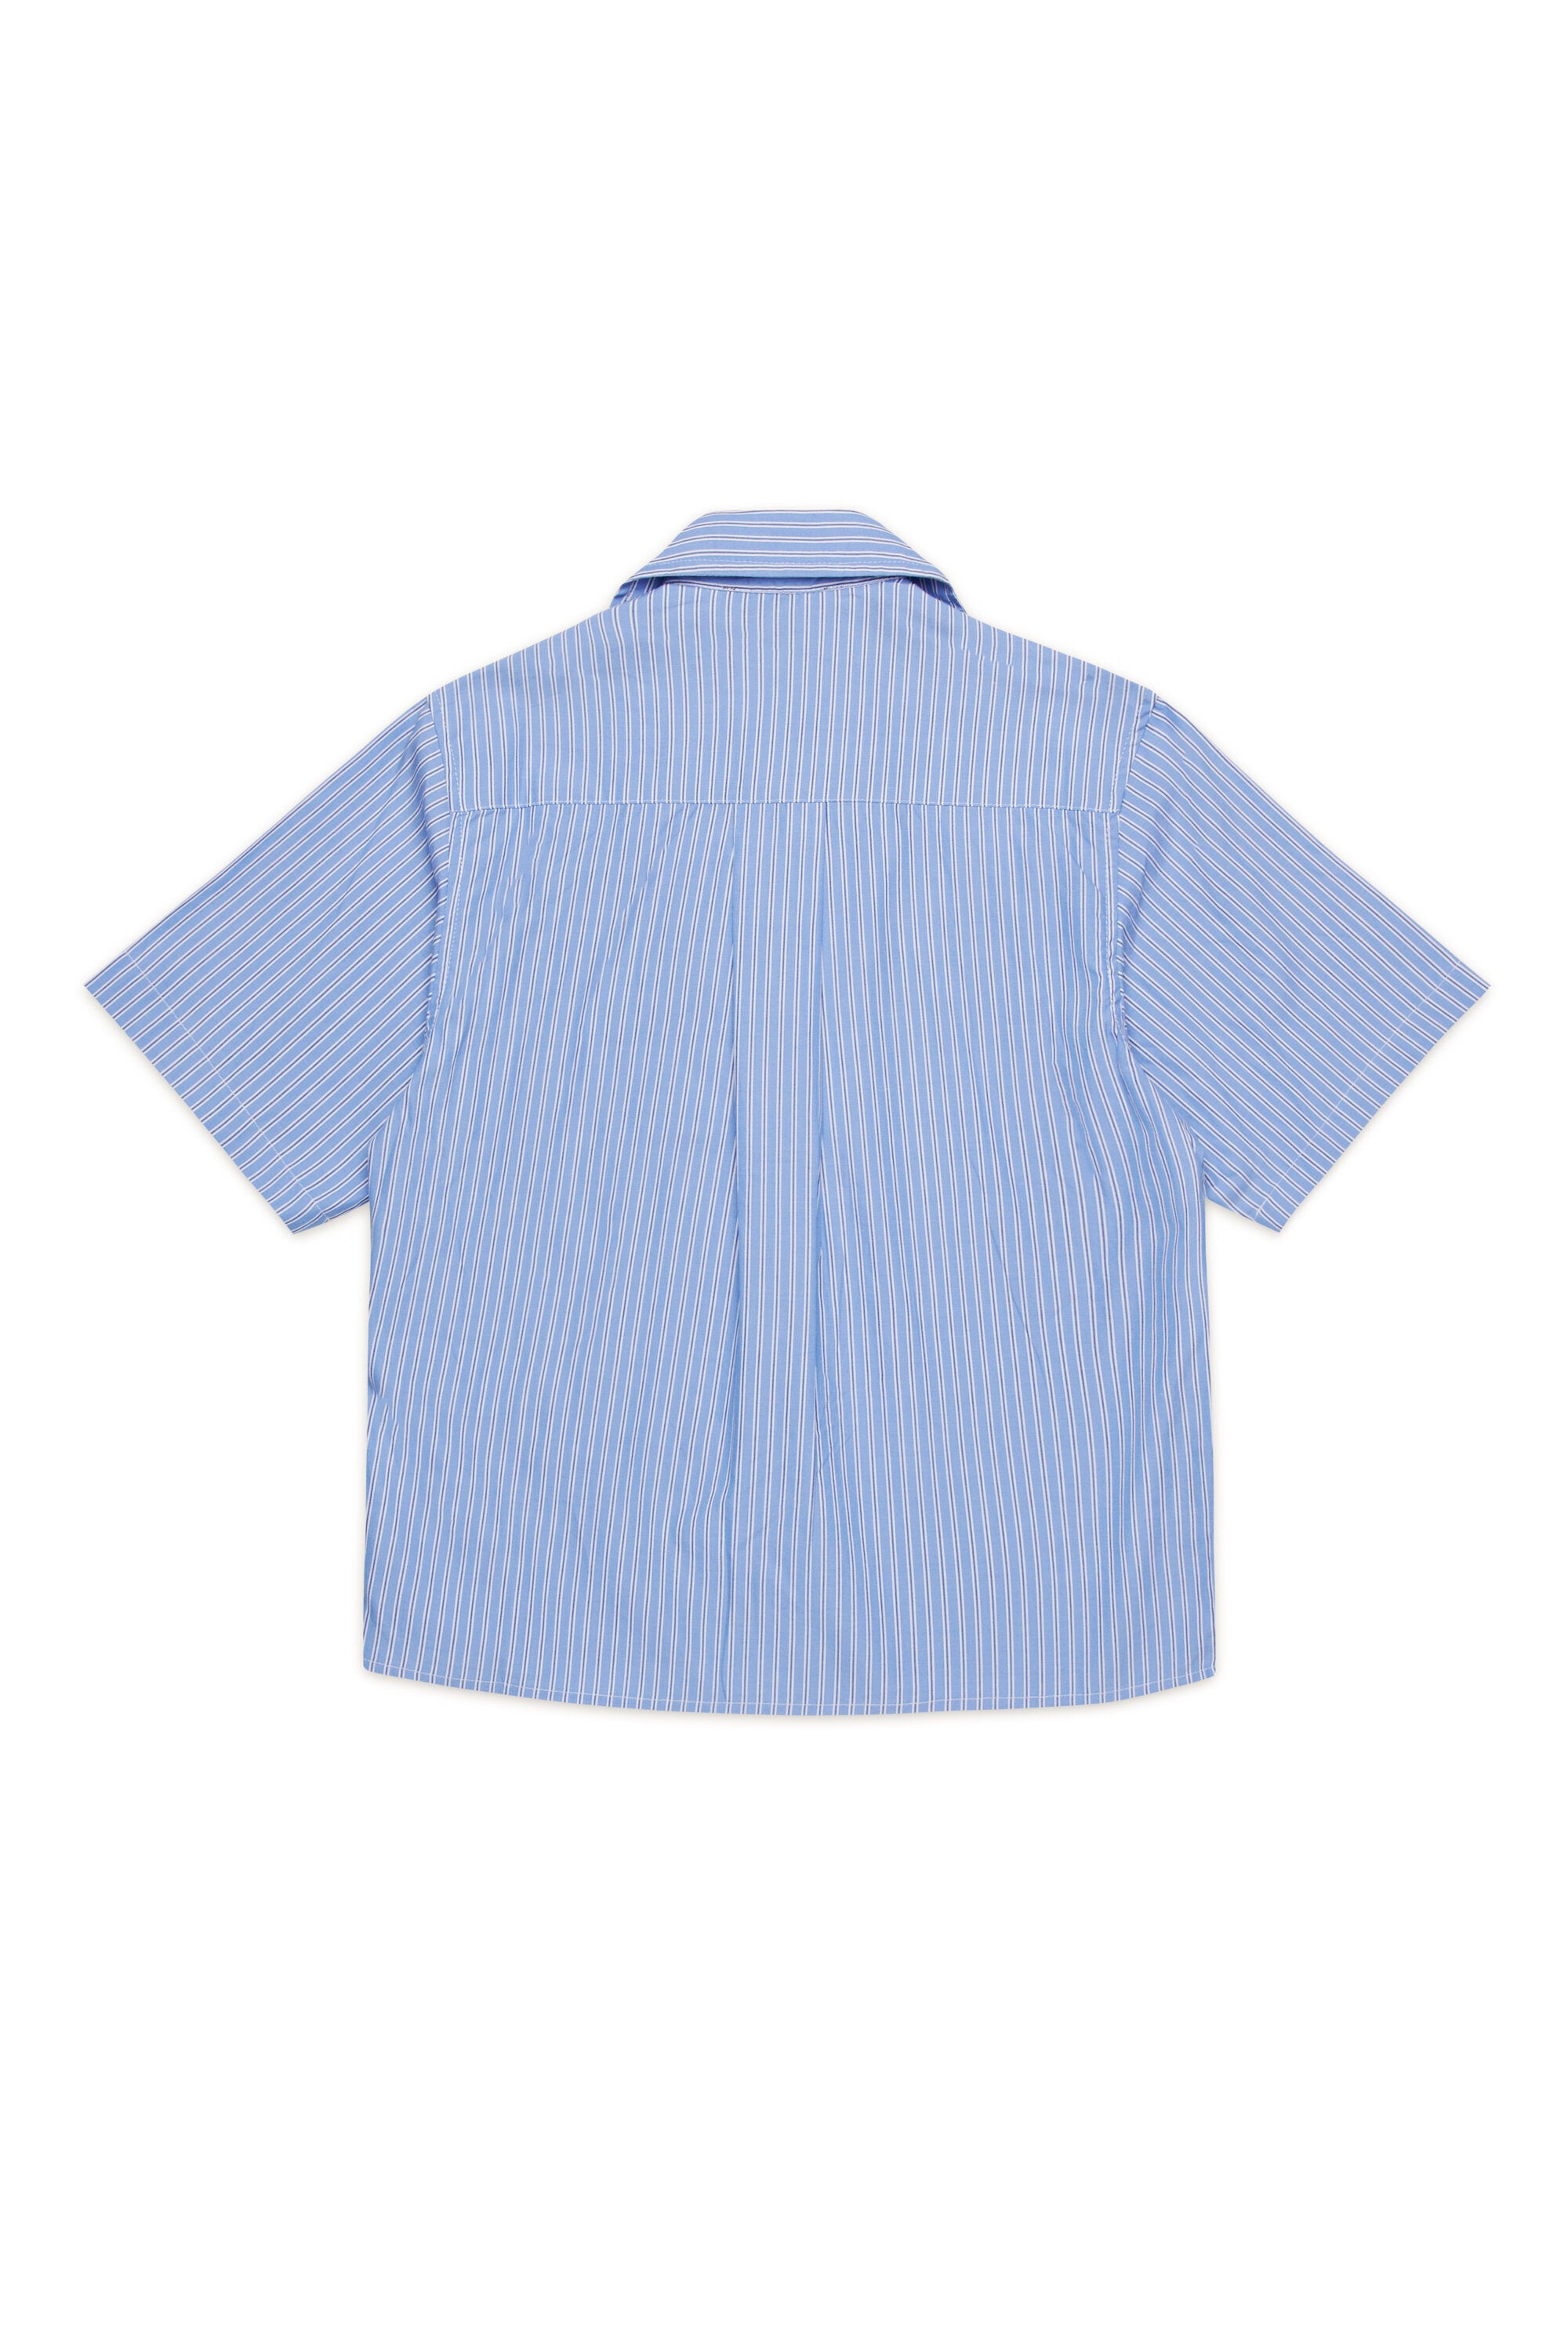 Bowling shirt with piranha stripes